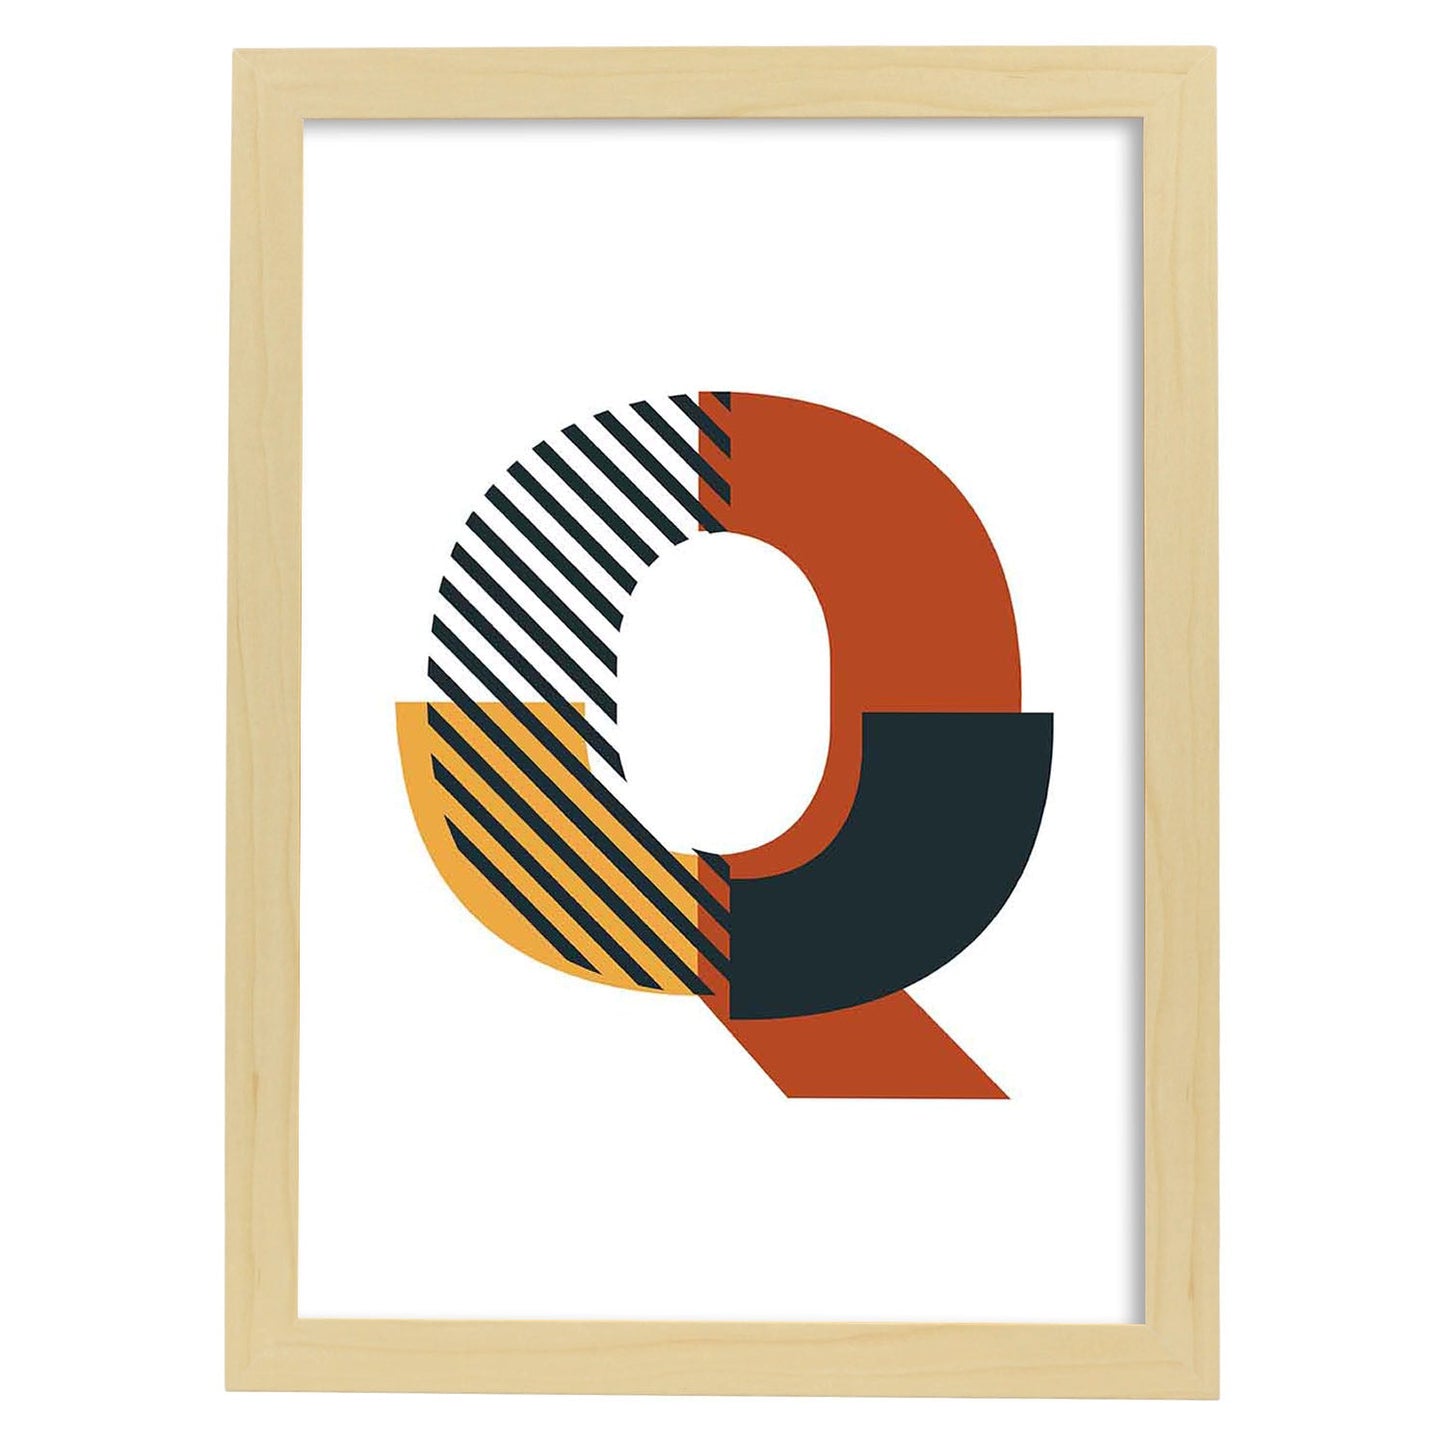 Poster de letra Q. Lámina estilo Geometria con imágenes del alfabeto.-Artwork-Nacnic-A3-Marco Madera clara-Nacnic Estudio SL